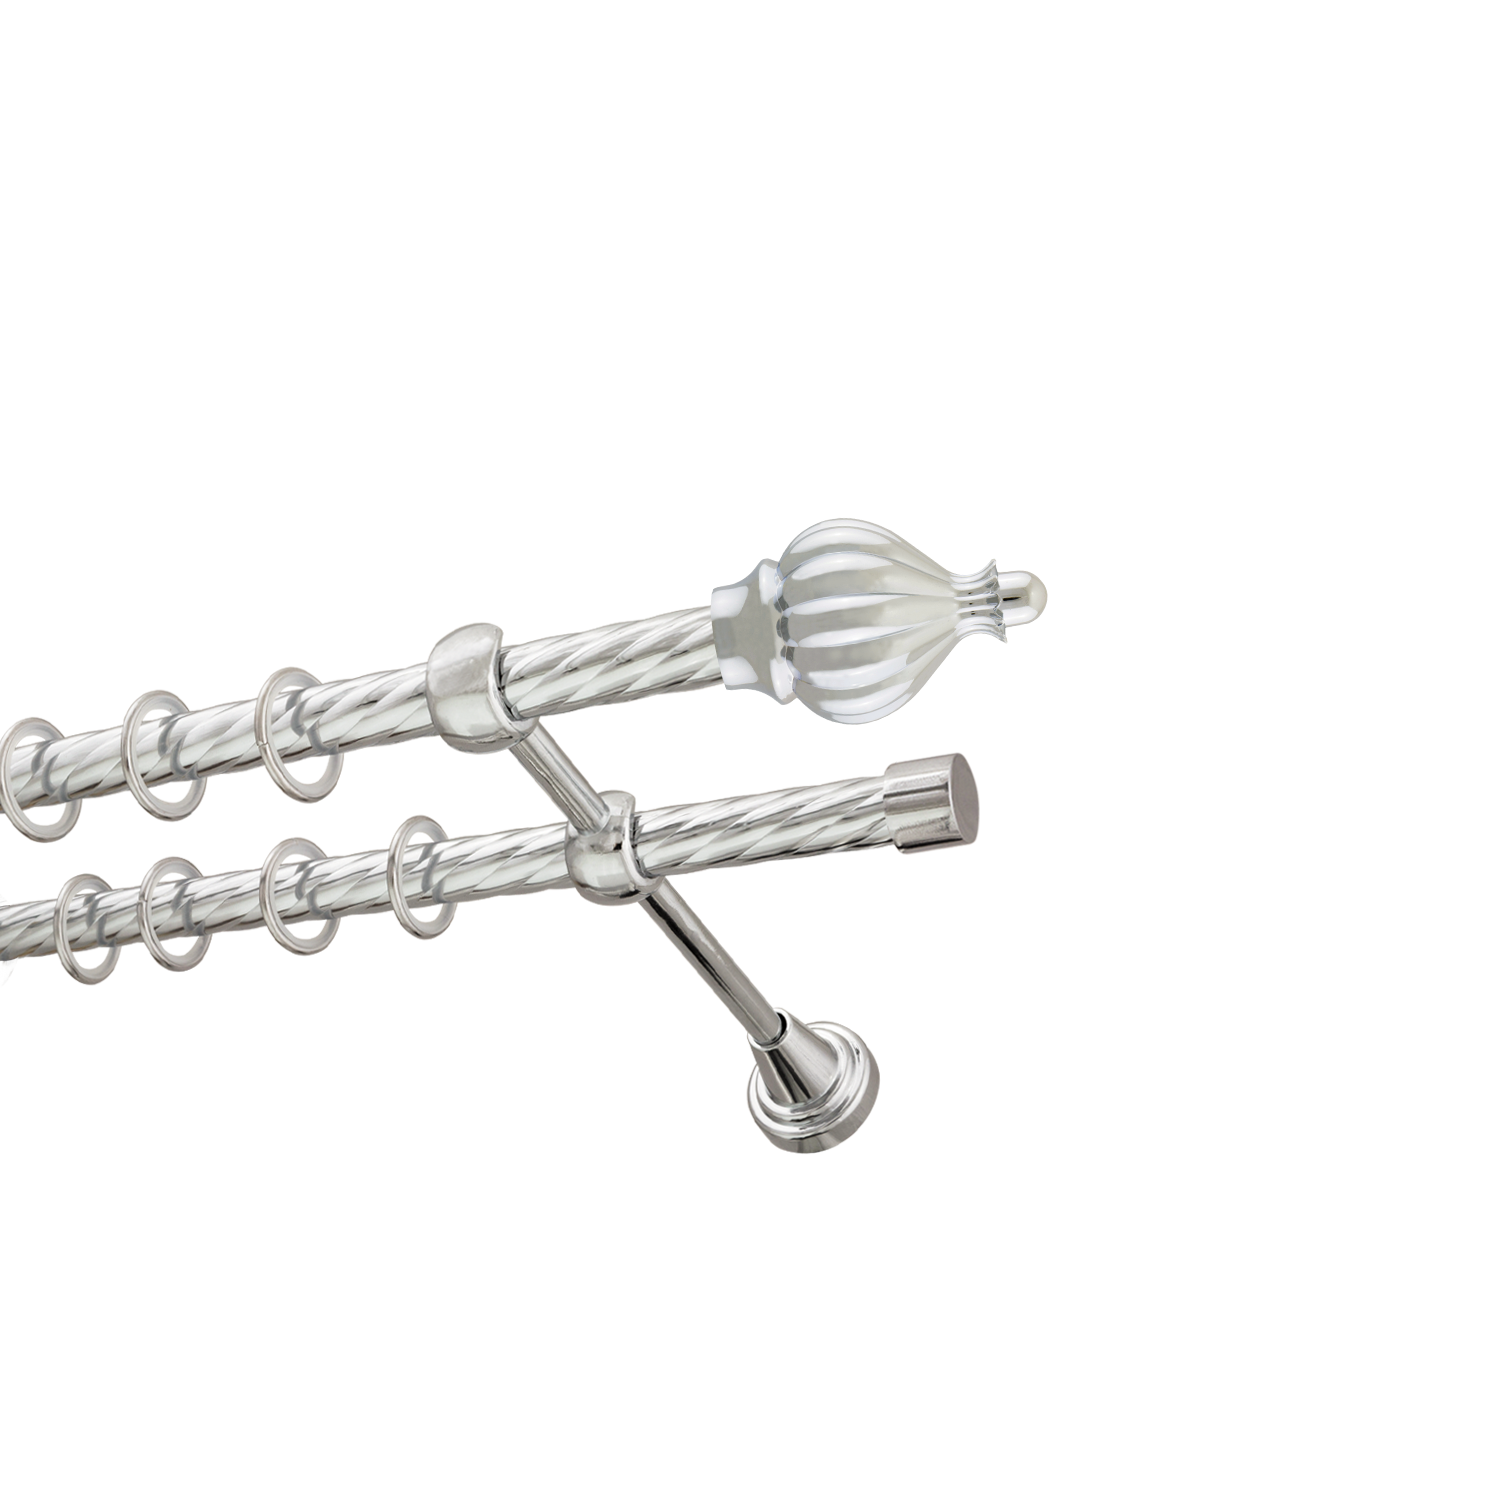 Металлический карниз для штор Афродита, двухрядный 16/16 мм, серебро, витая штанга, длина 180 см - фото Wikidecor.ru